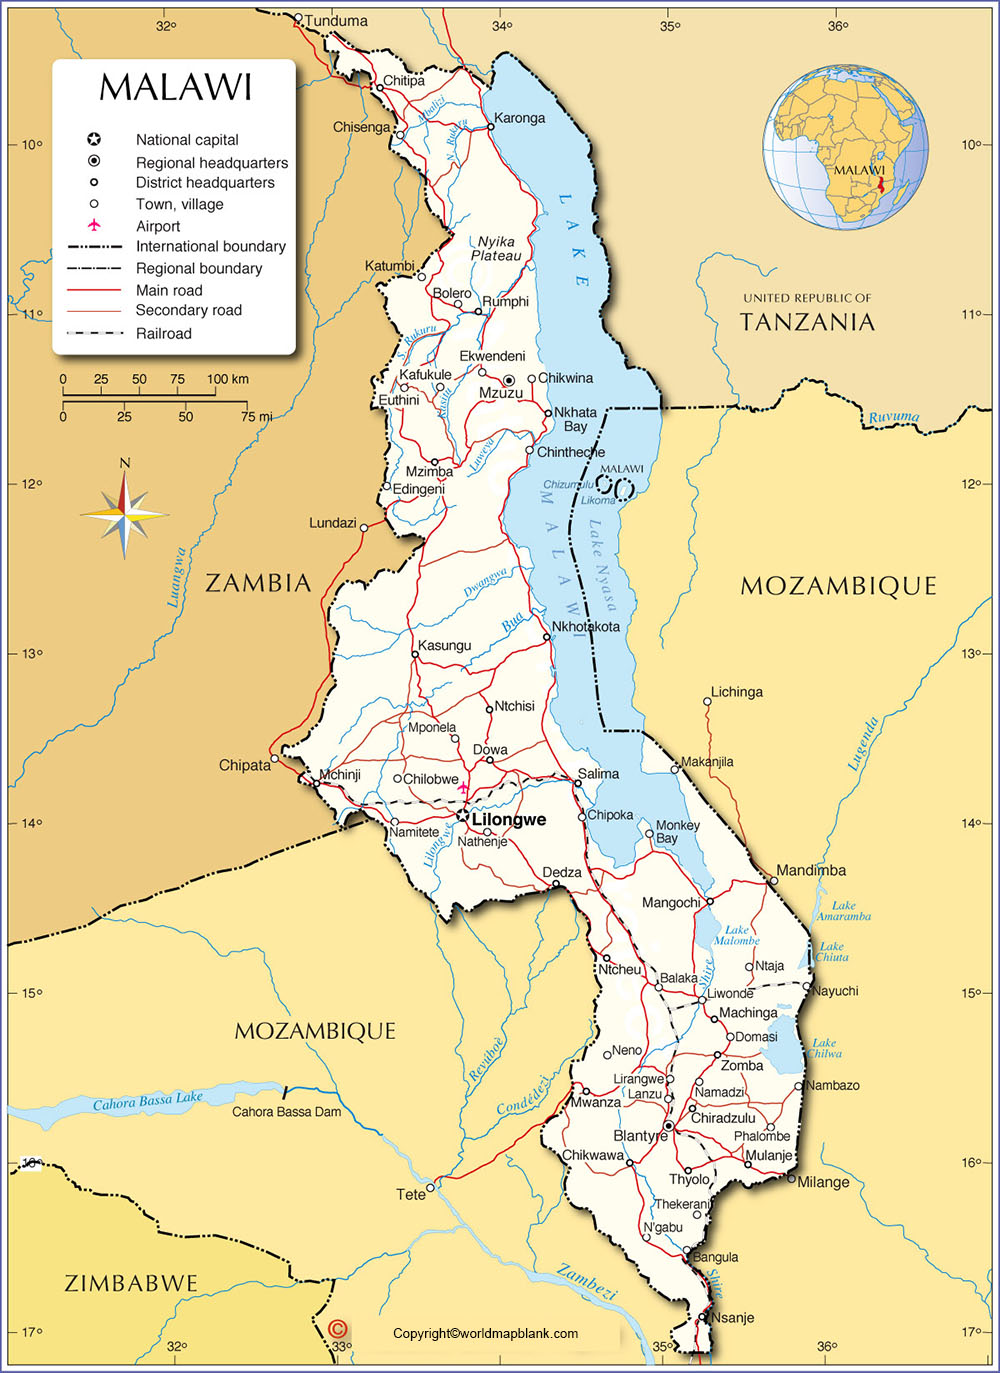 Labeled Map of Malawi